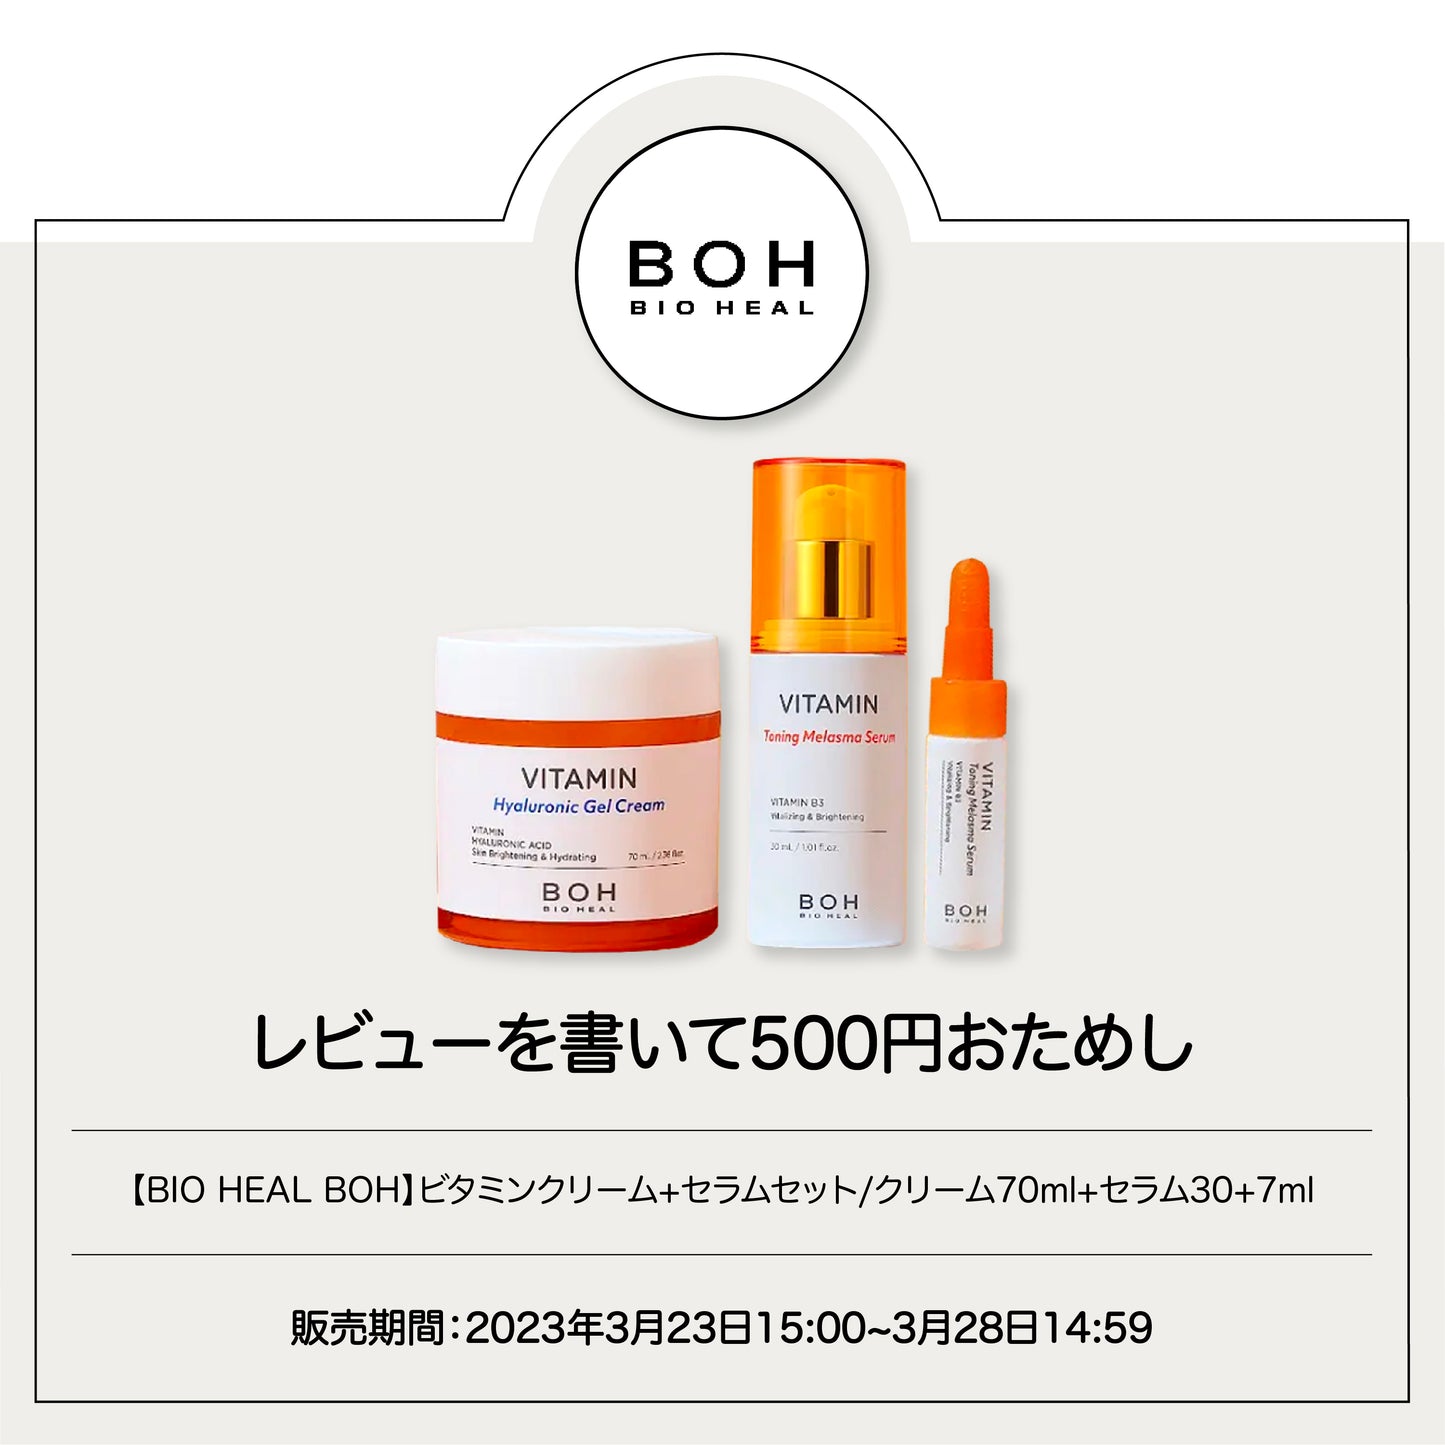 [BIO HEAL BOH] ビタミンクリーム+セラム日本限定セット